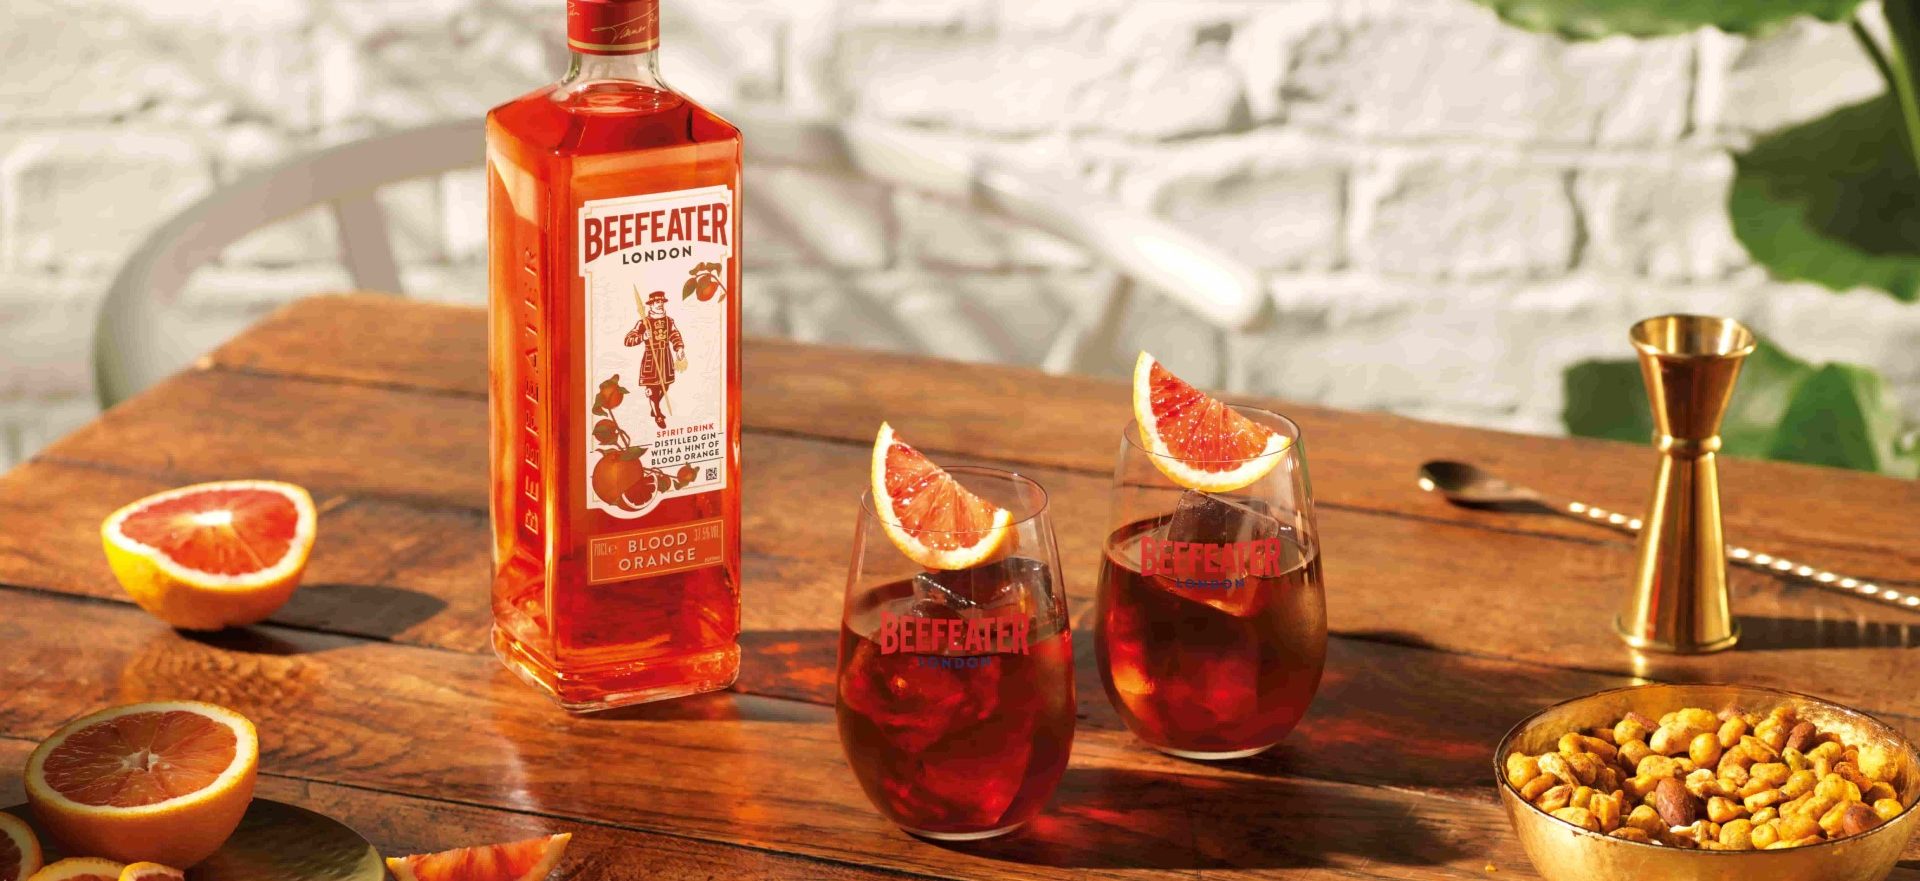 beefeater blood orange sunset negroni cocktail 1 aspect ratio 1647 756